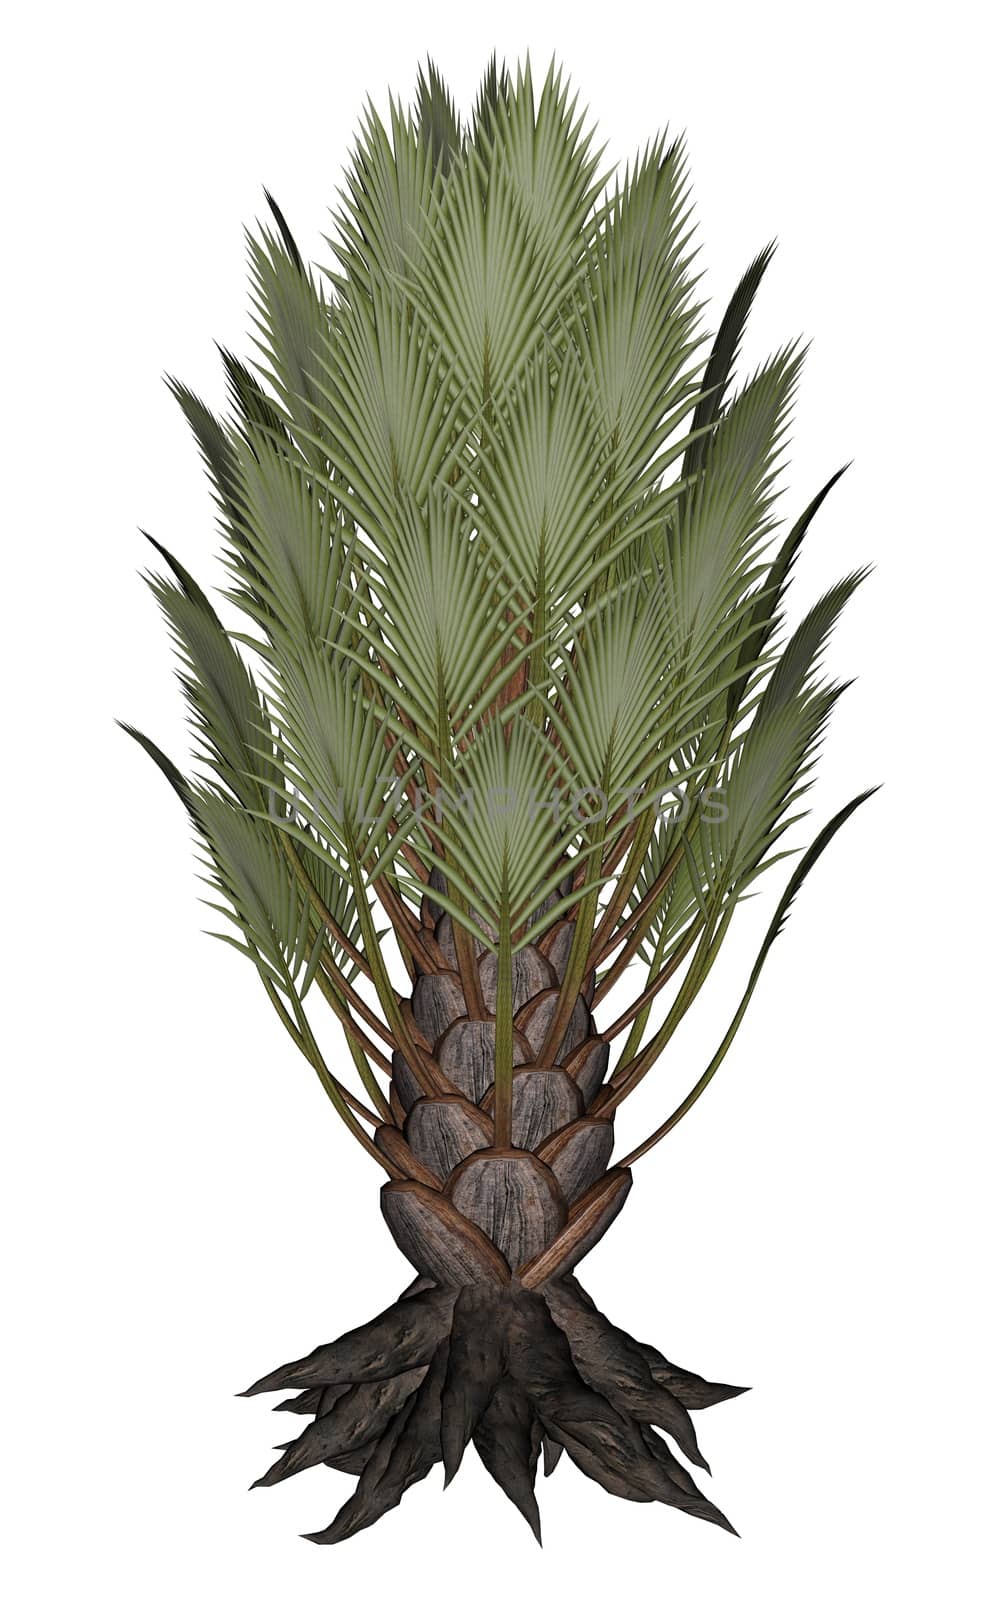 Palmtree, palm tree - 3D render by Elenaphotos21